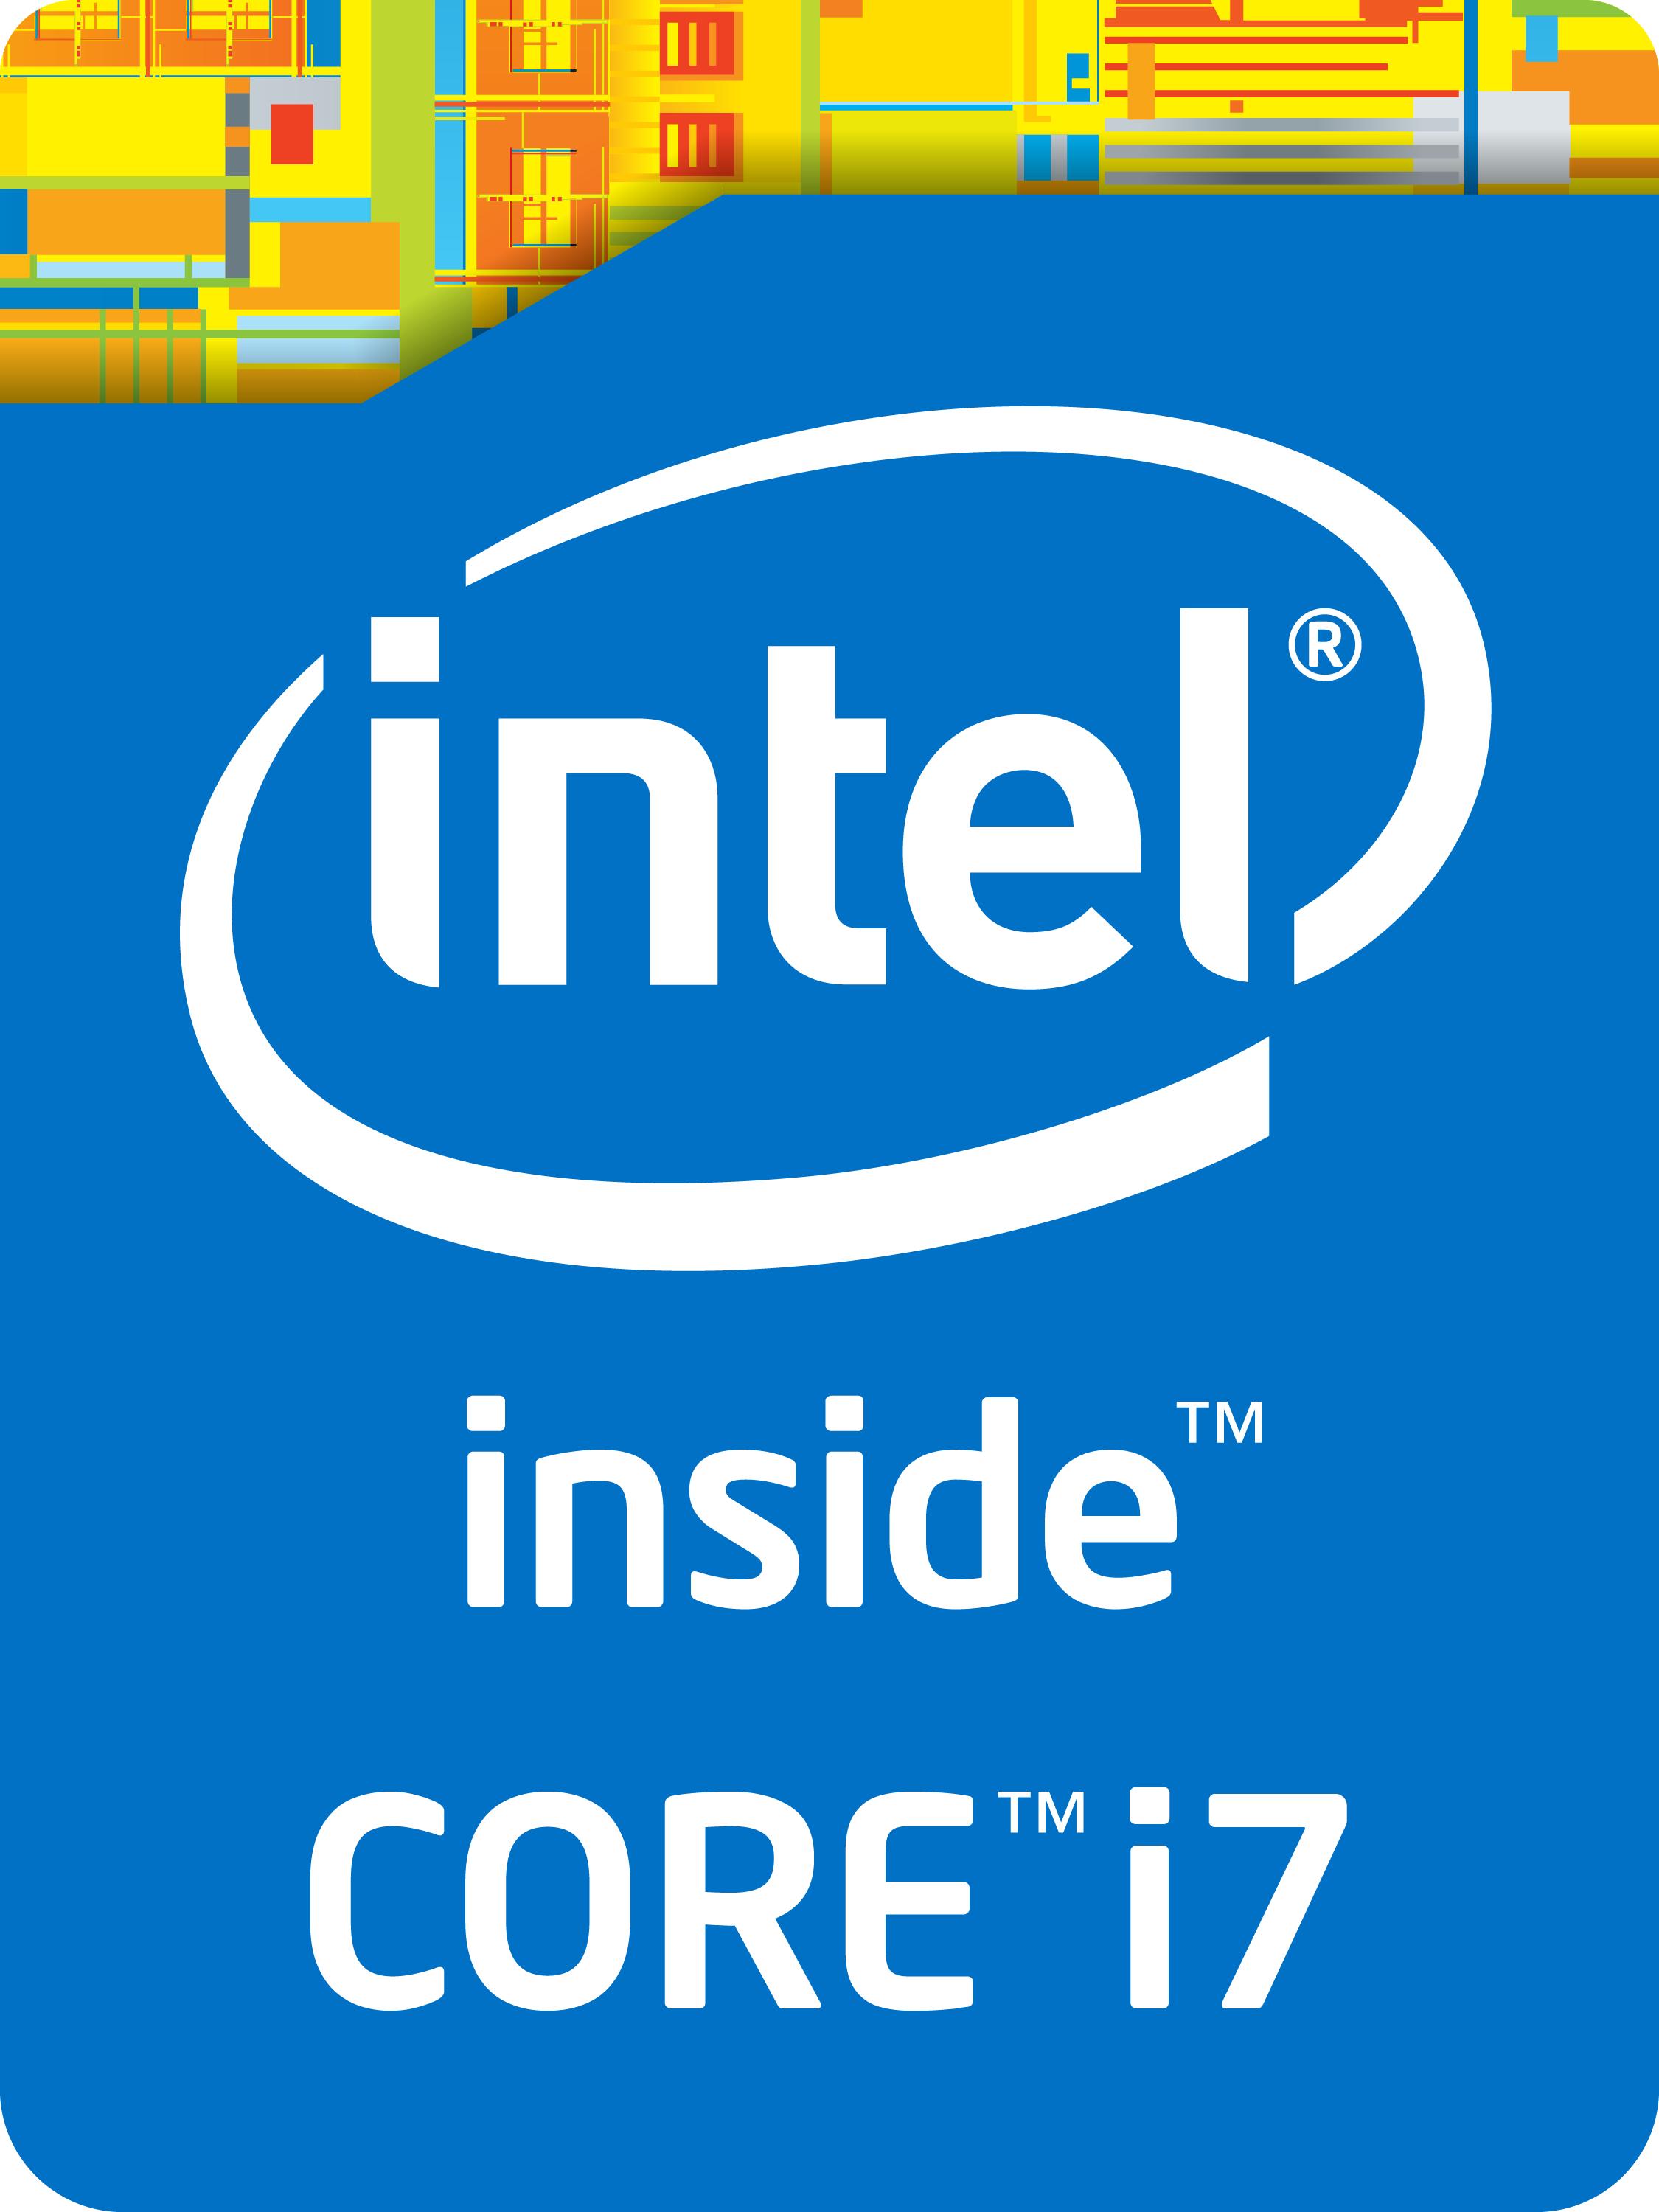 Intel Core i7 4700MQ Notebook Processor - NotebookCheck.net Tech